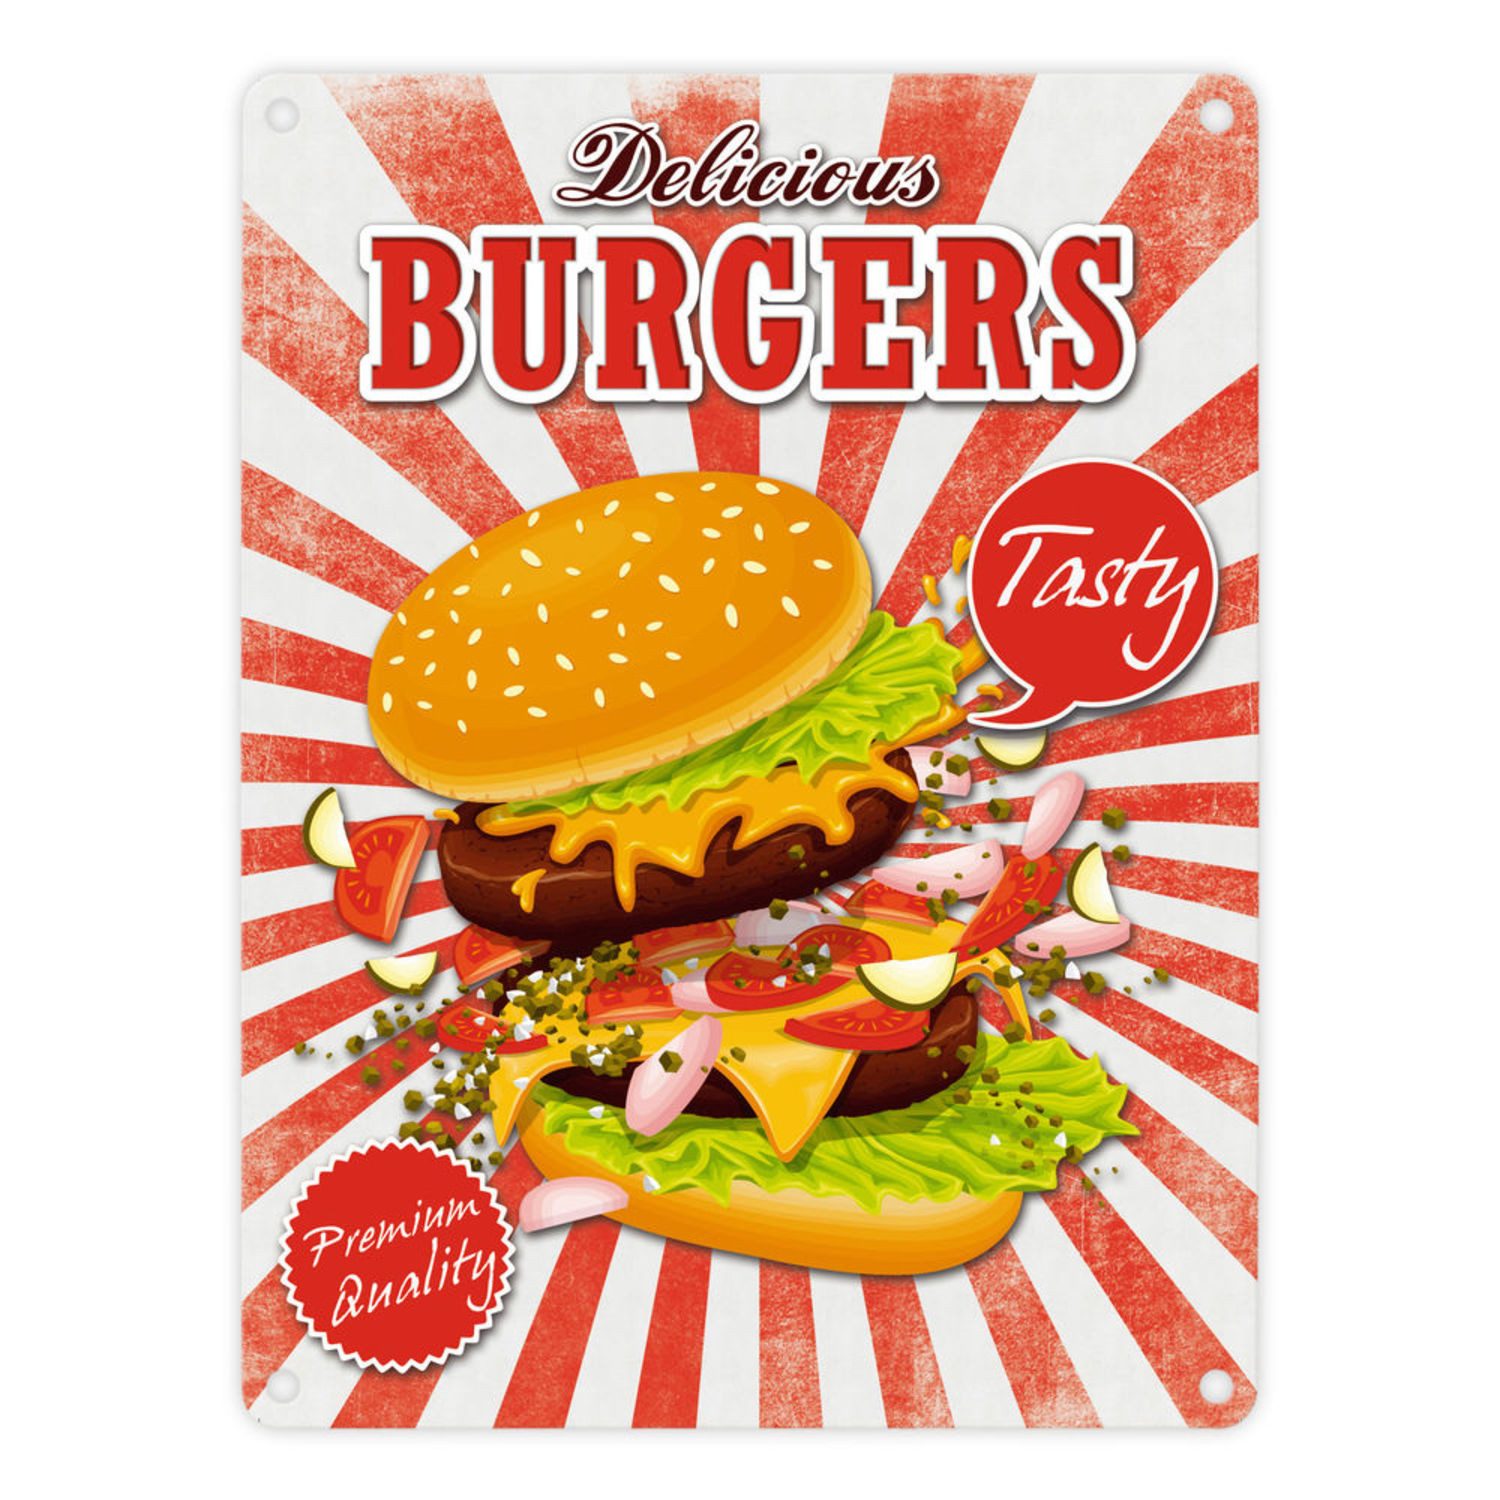 speecheese Metallschild Fast Food Delicious Burgers Schild Blechschild Aluminiumschild